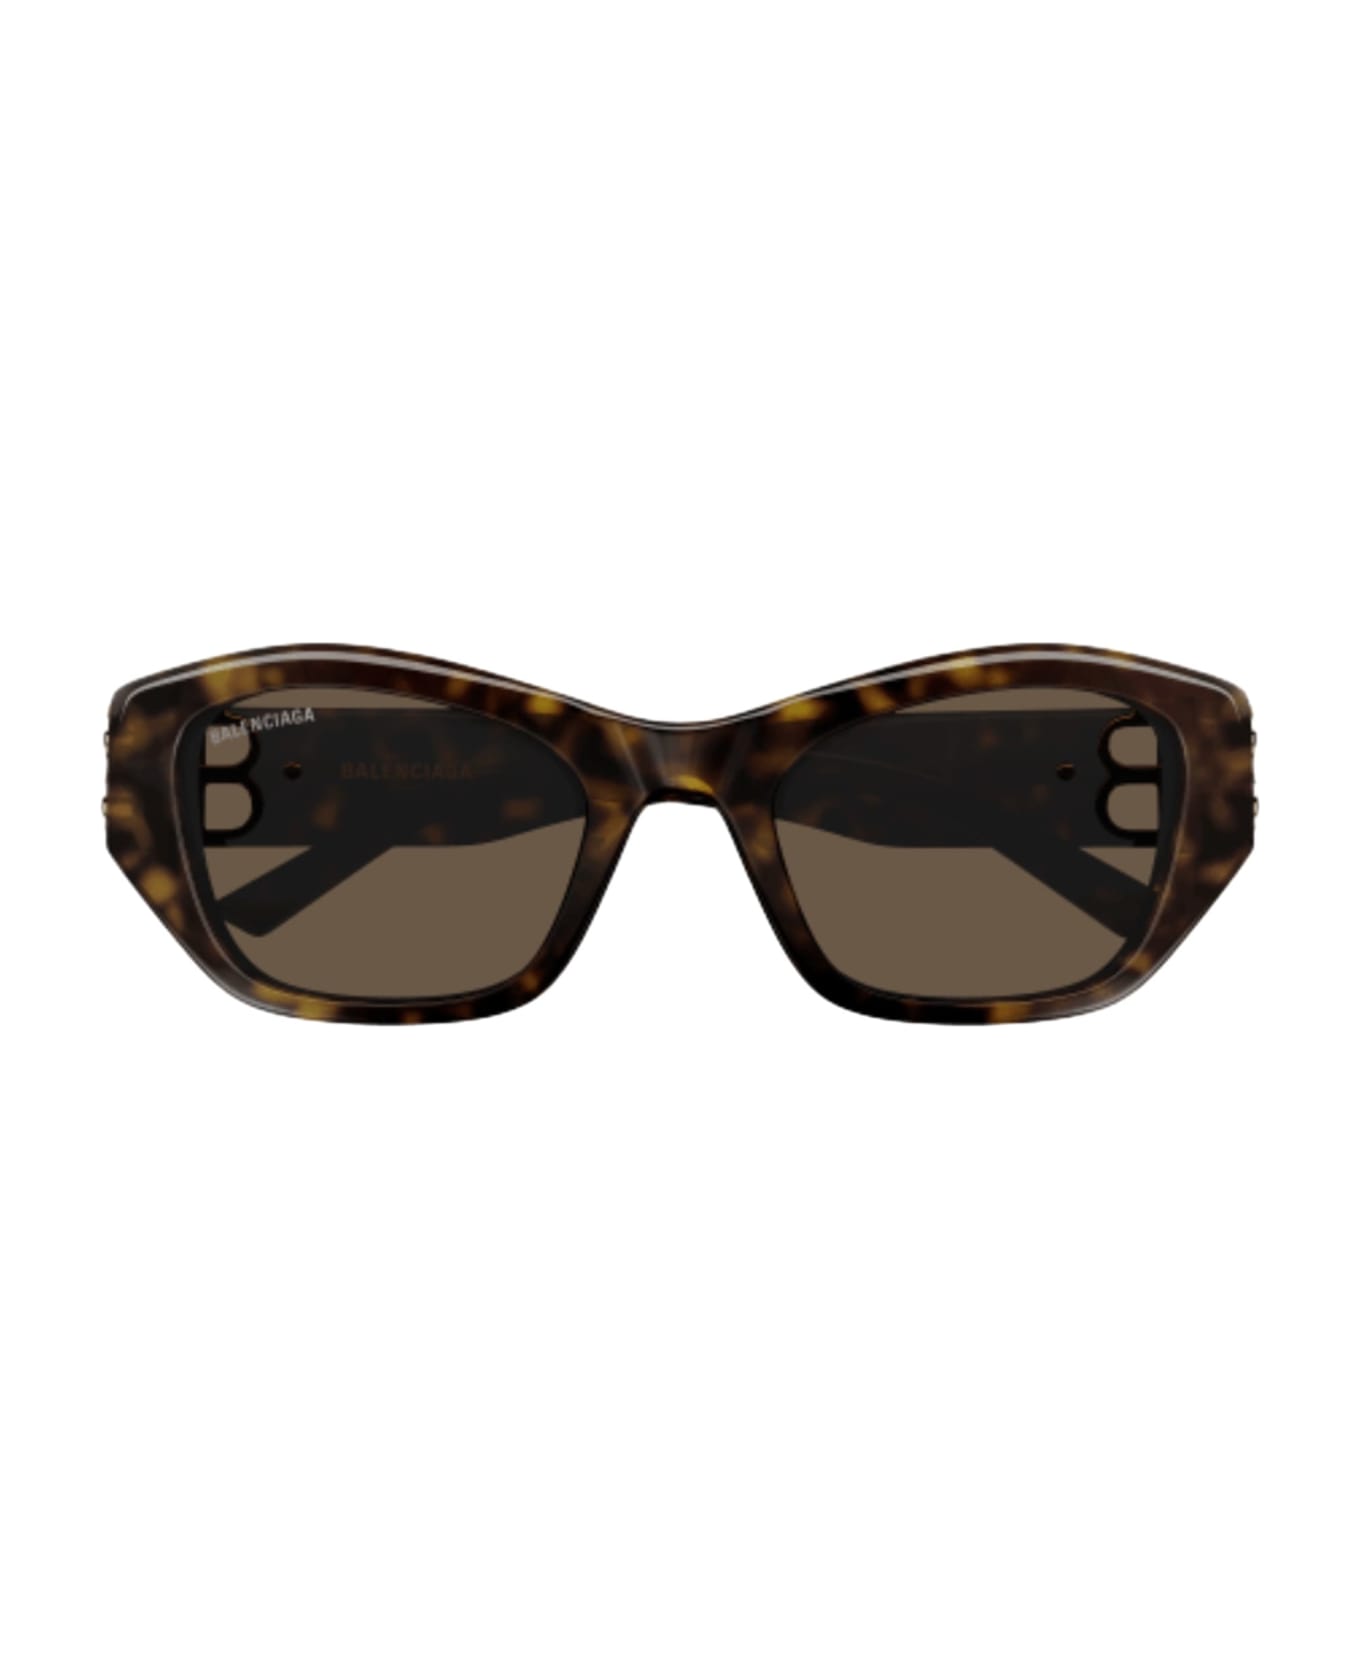 Balenciaga Eyewear Bb0311sk-002 - Tortoise Sunglasses - Tortoise